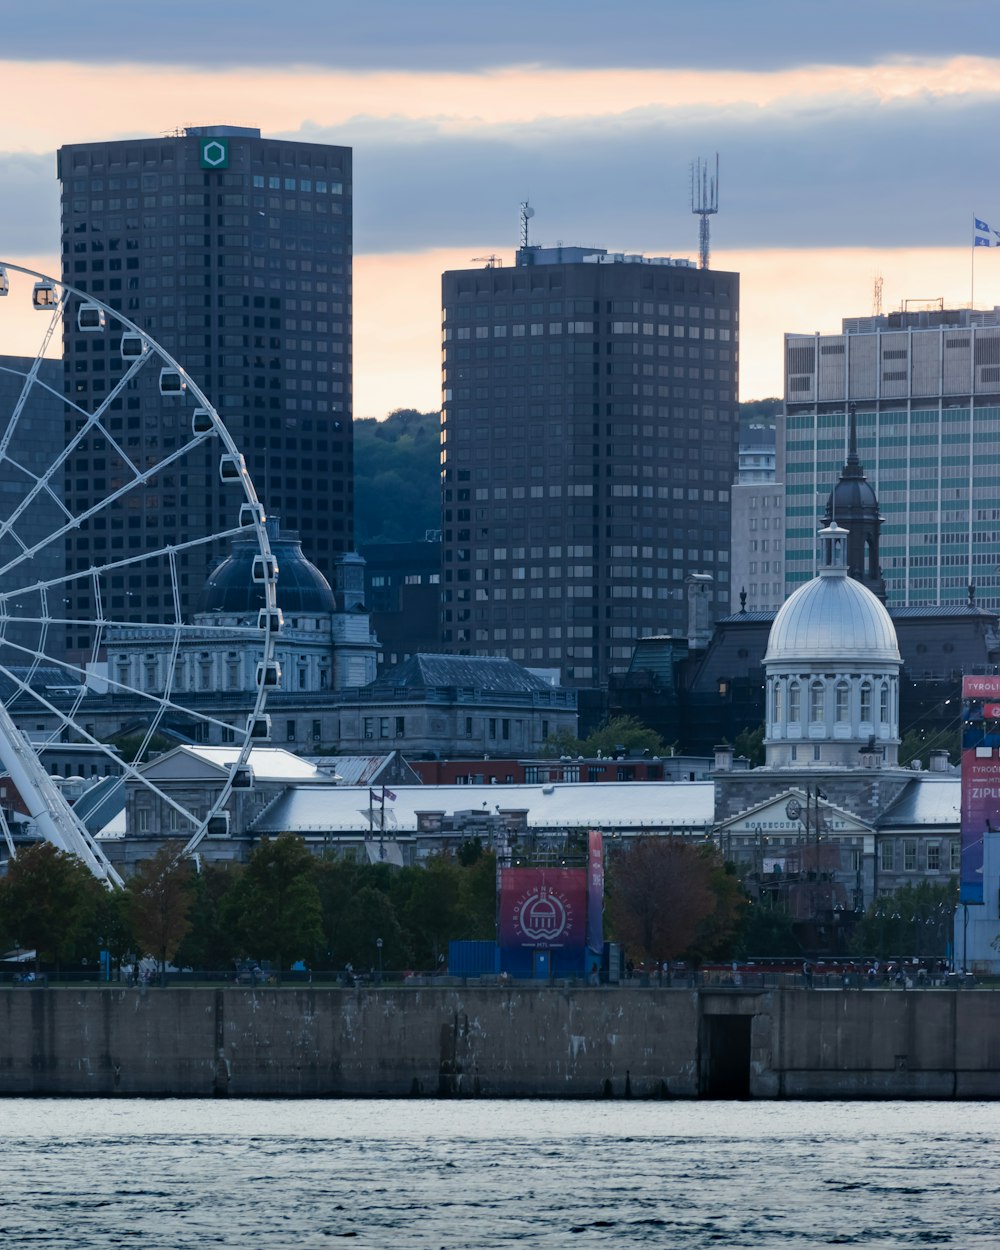 a ferris wheel in front of a city skyline